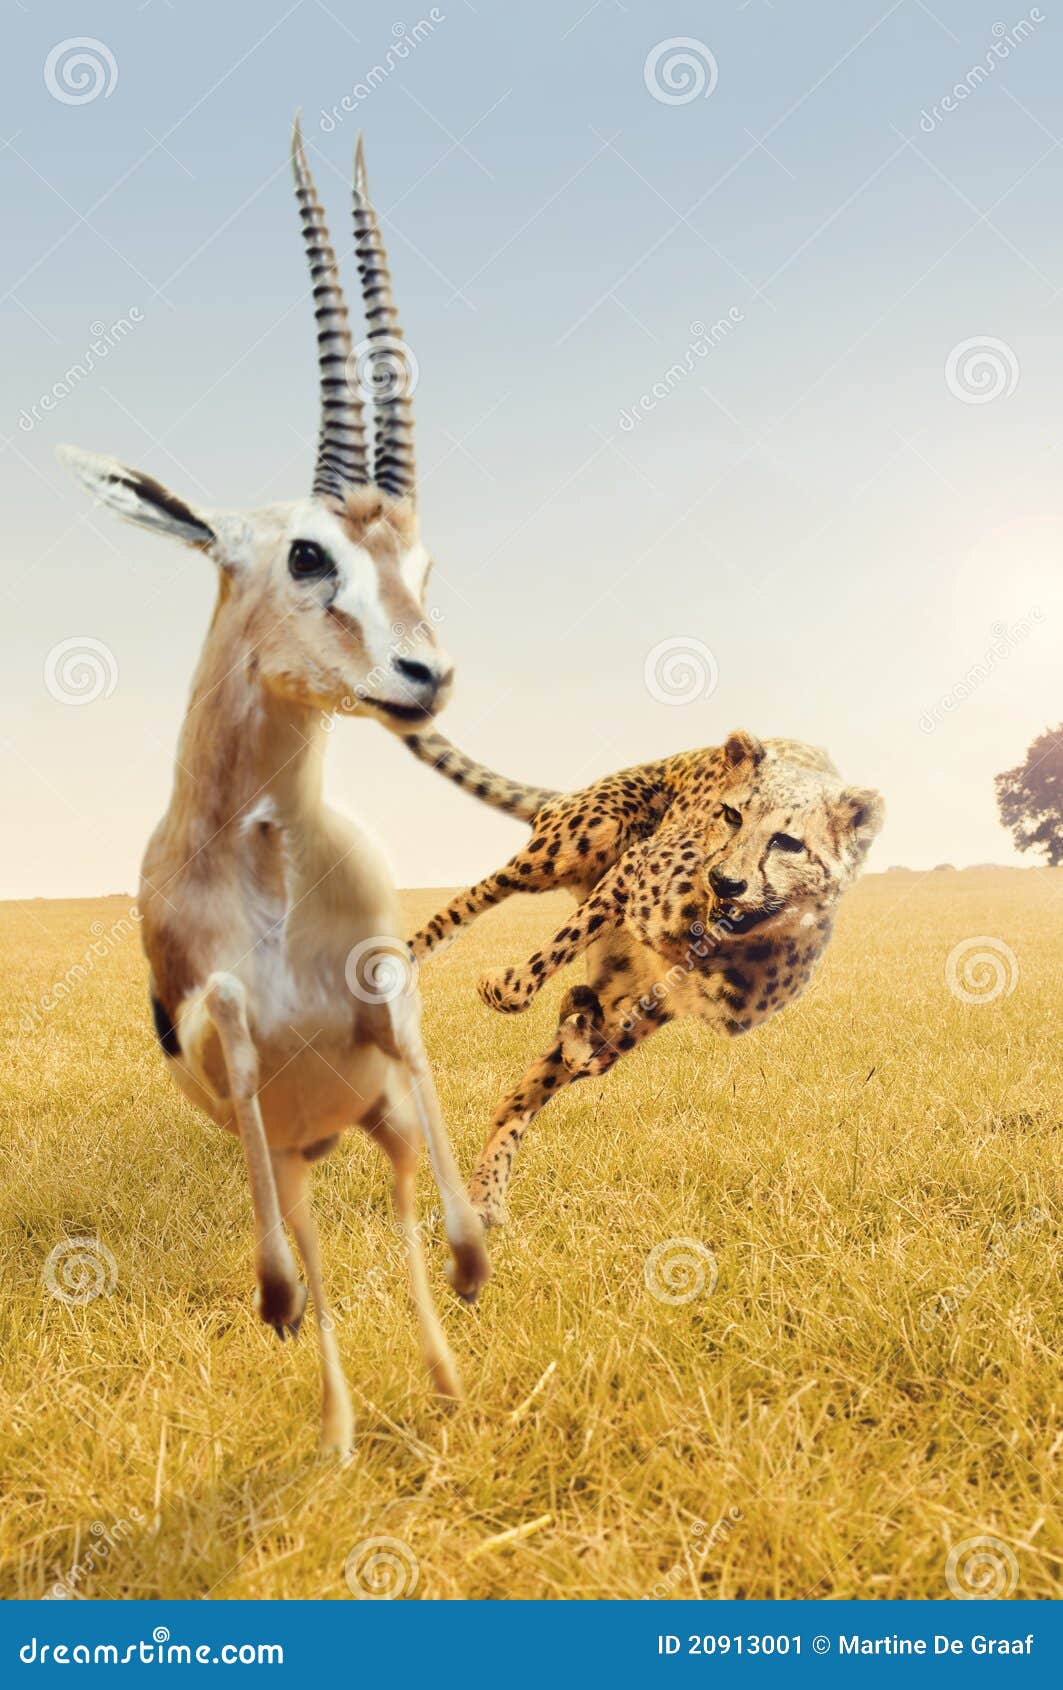 Cheetah hunting gazelle on Africa s savanna